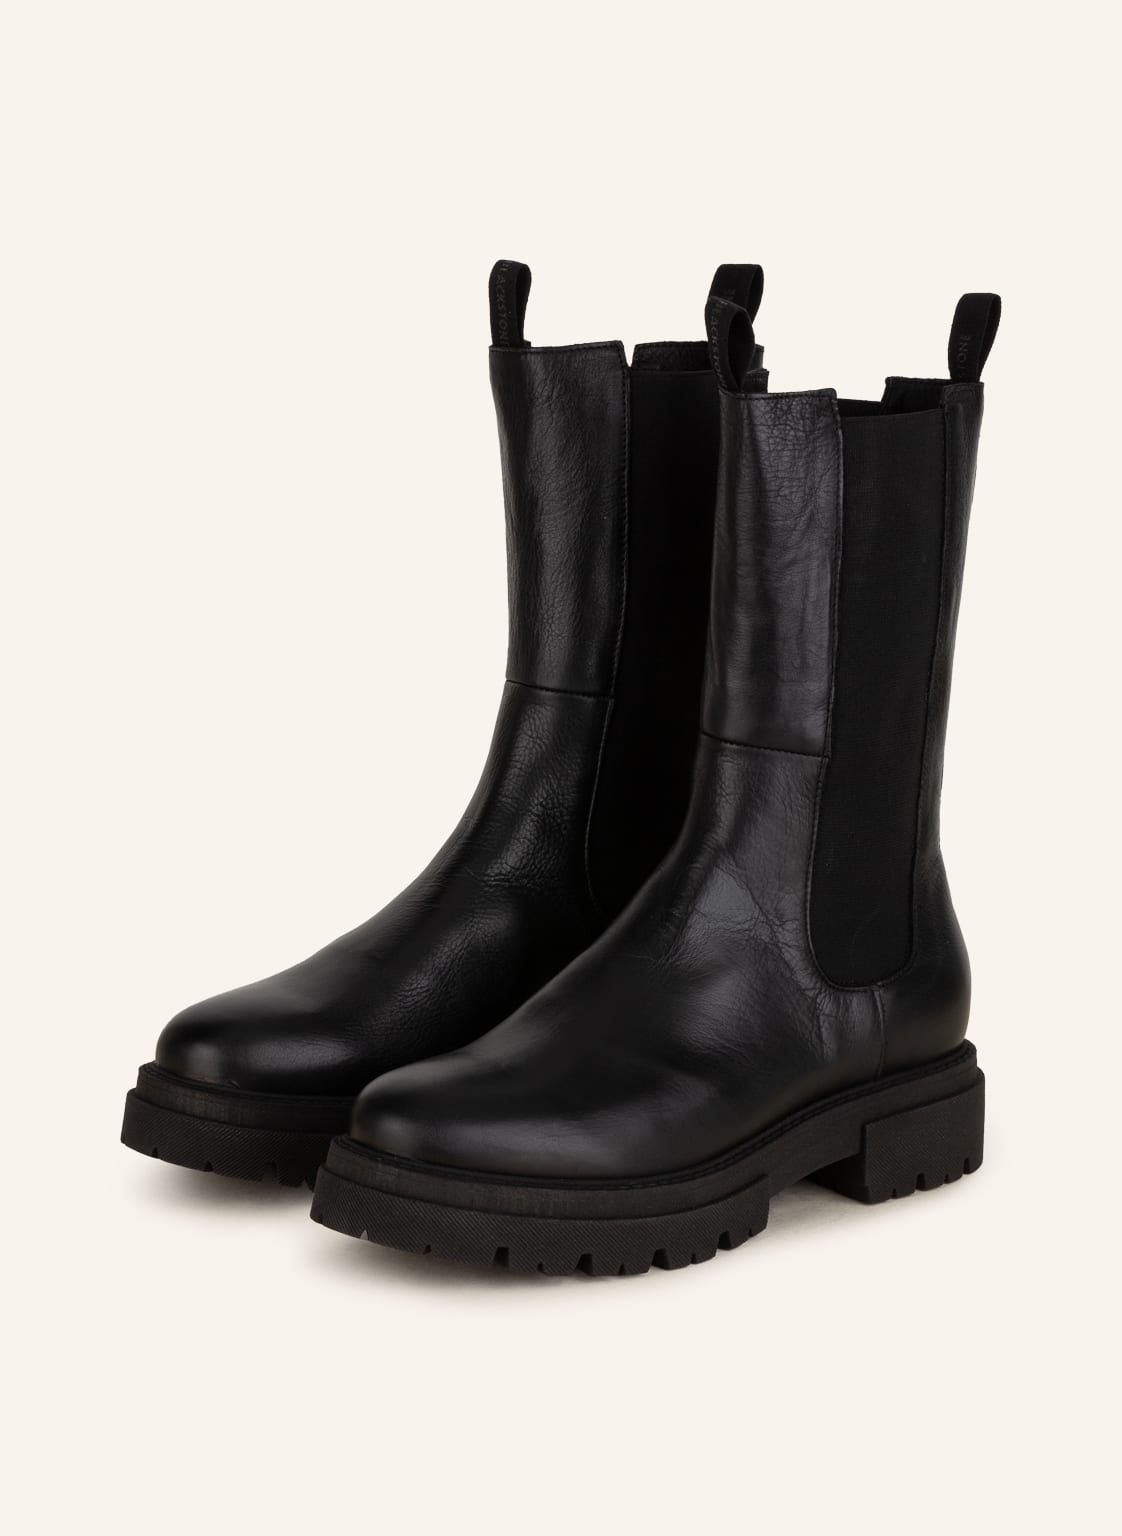 Image of Blackstone Chelsea-Boots schwarz